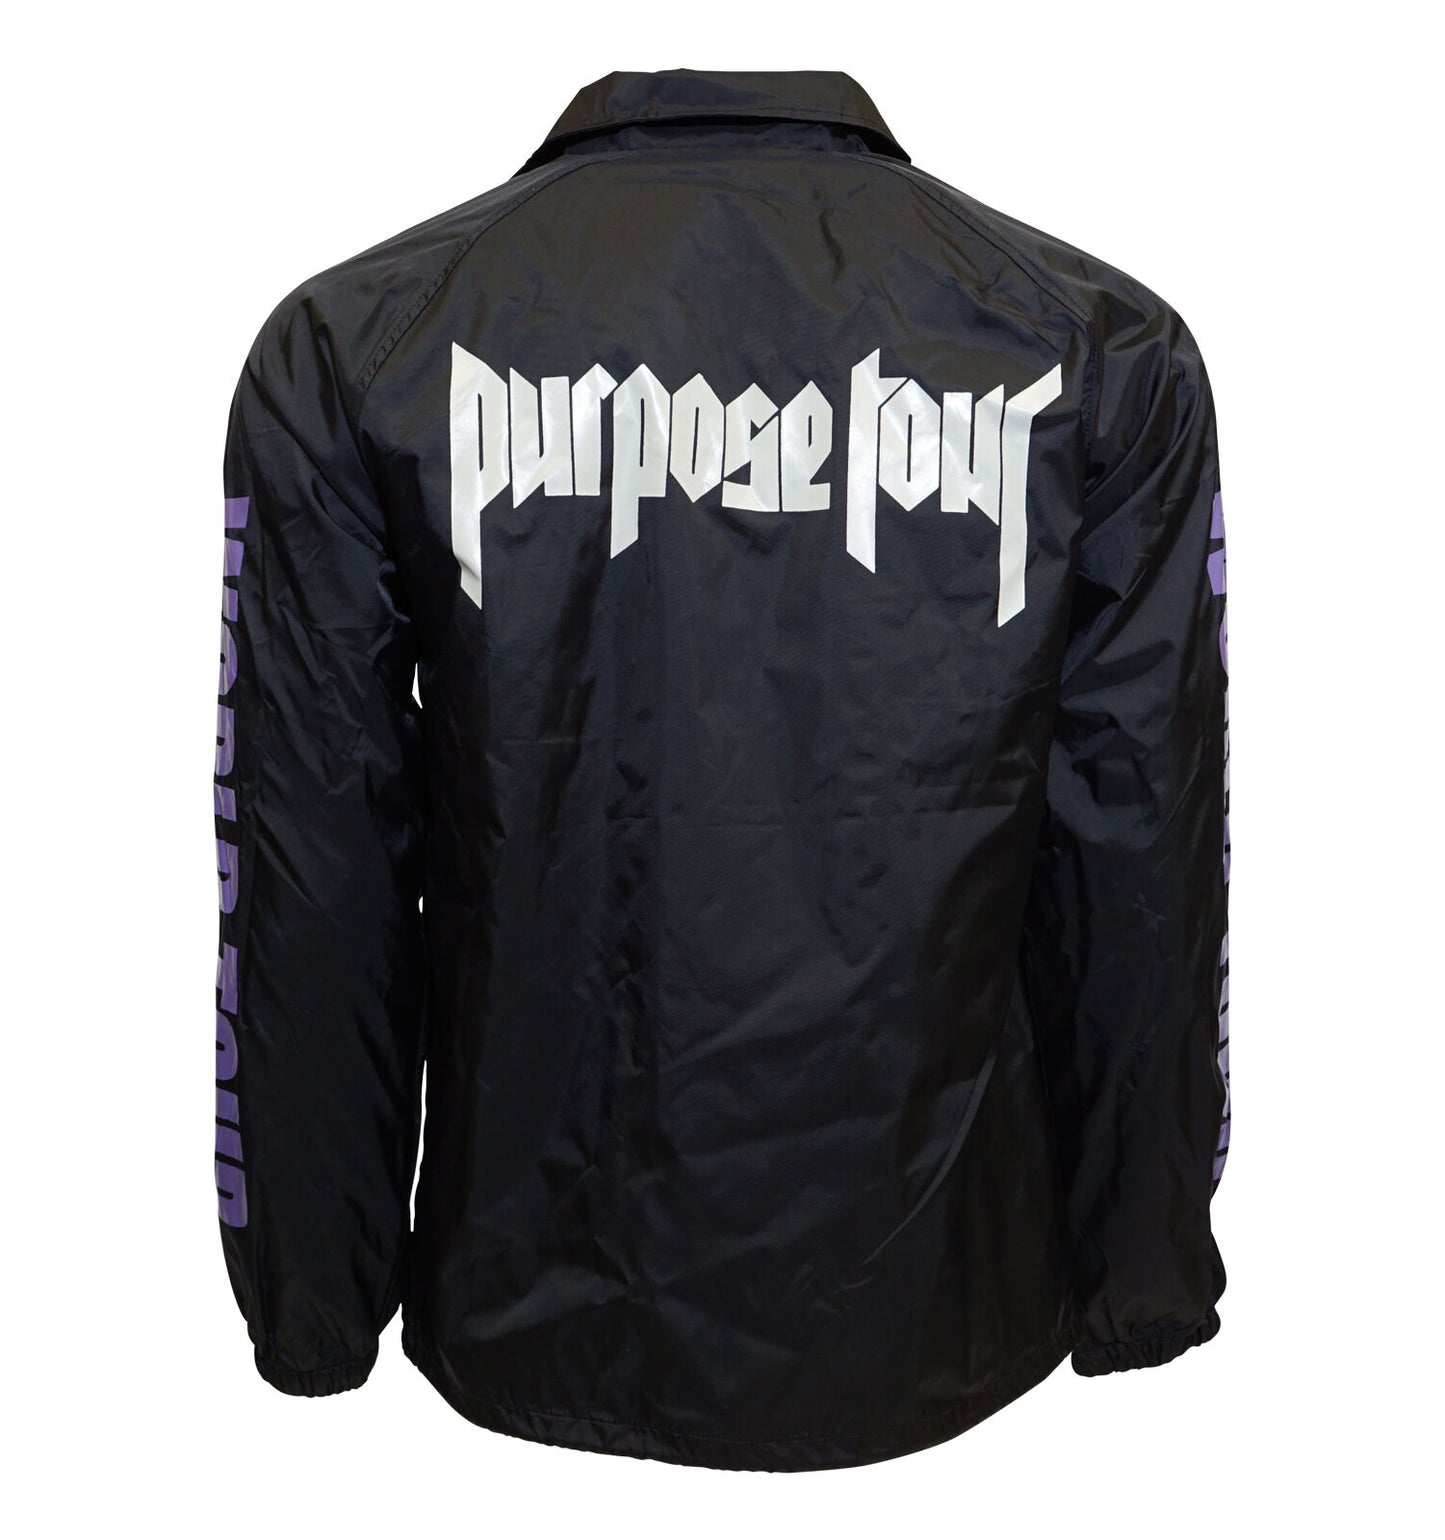 Justin Bieber All Purpose World Tour Windbreaker Jacket